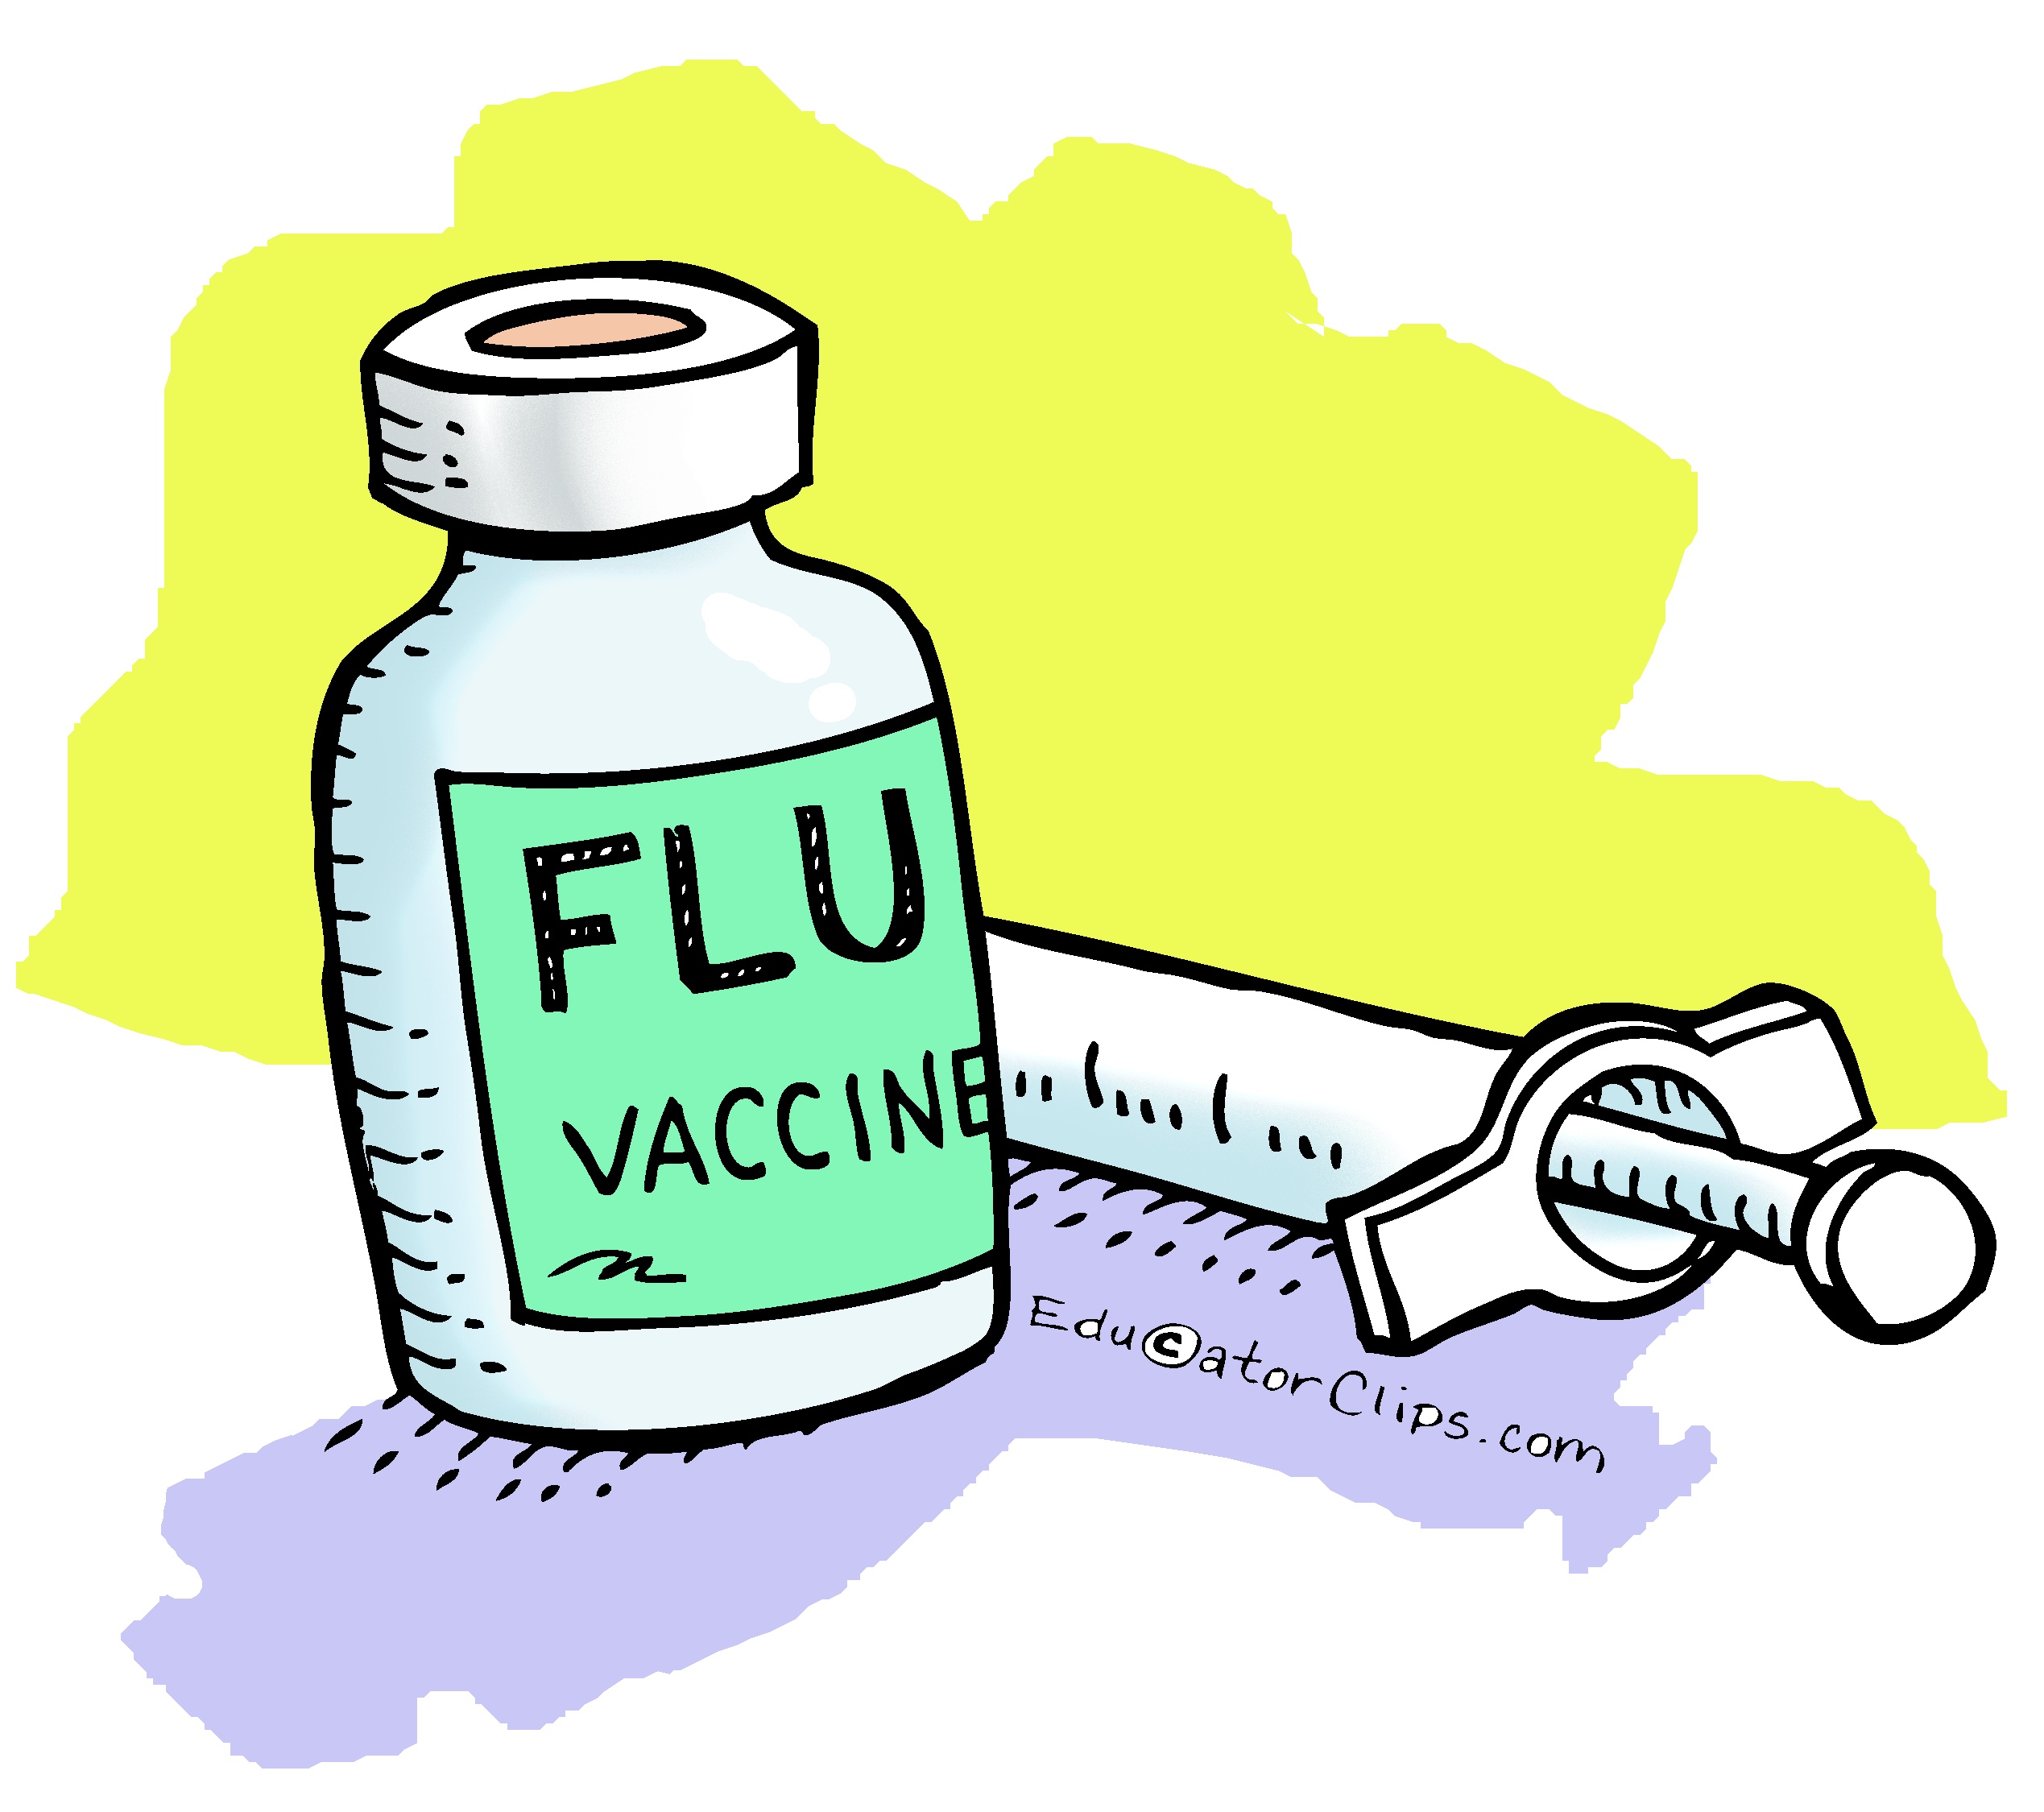 flu vaccine clip art,flu shot clip art,vaccination,health,illness prevention